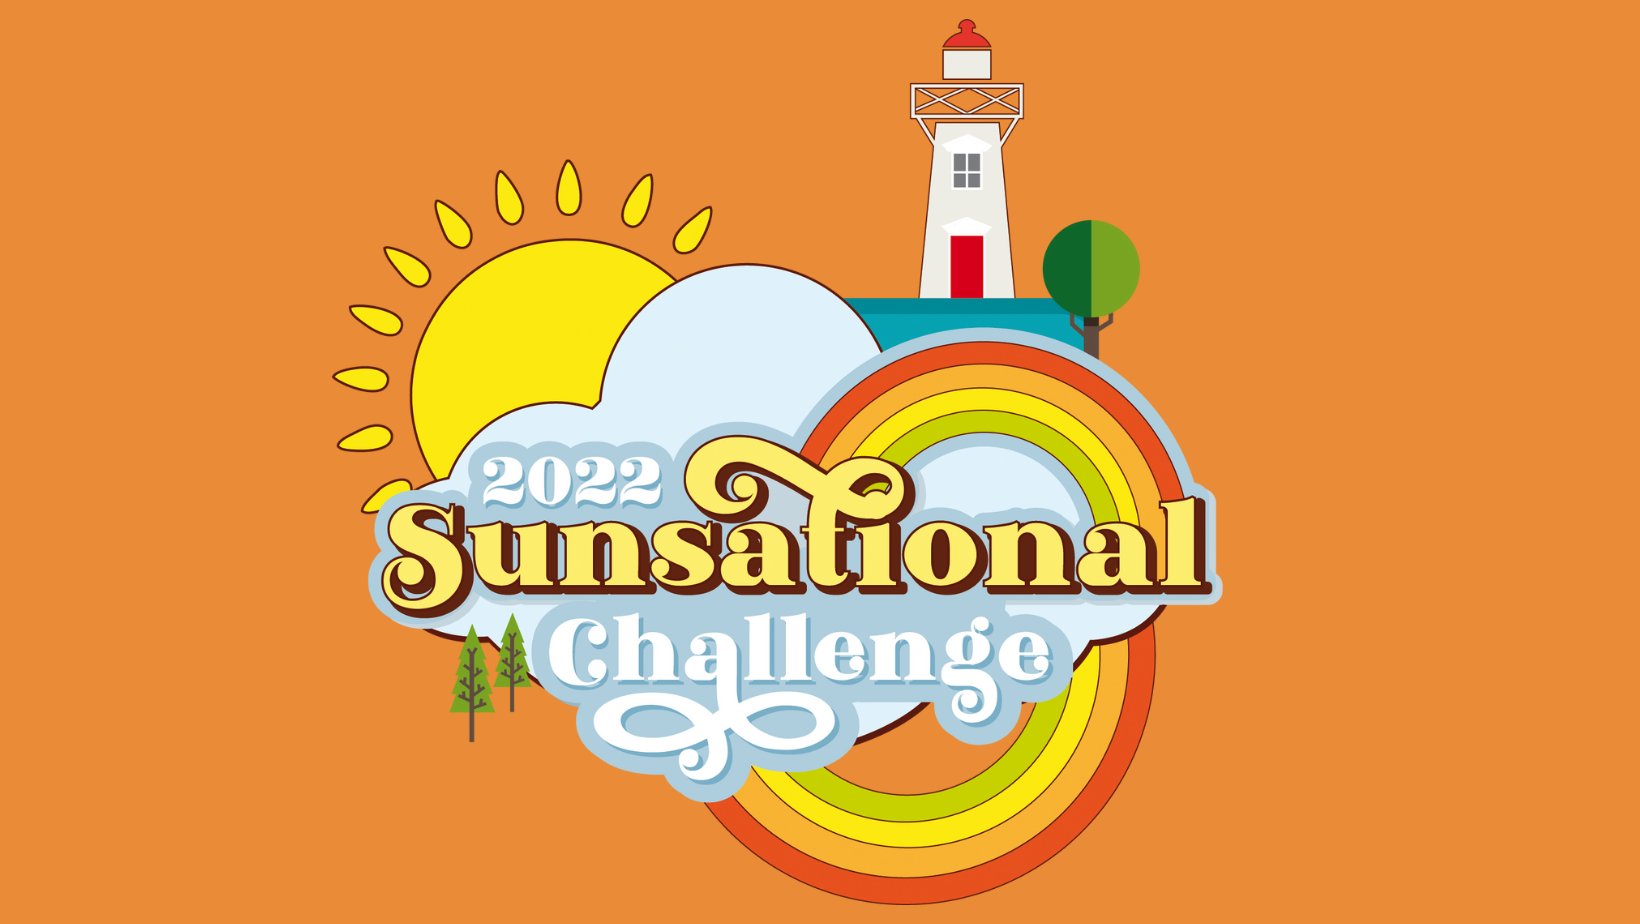 2022 Sunsational Challenge